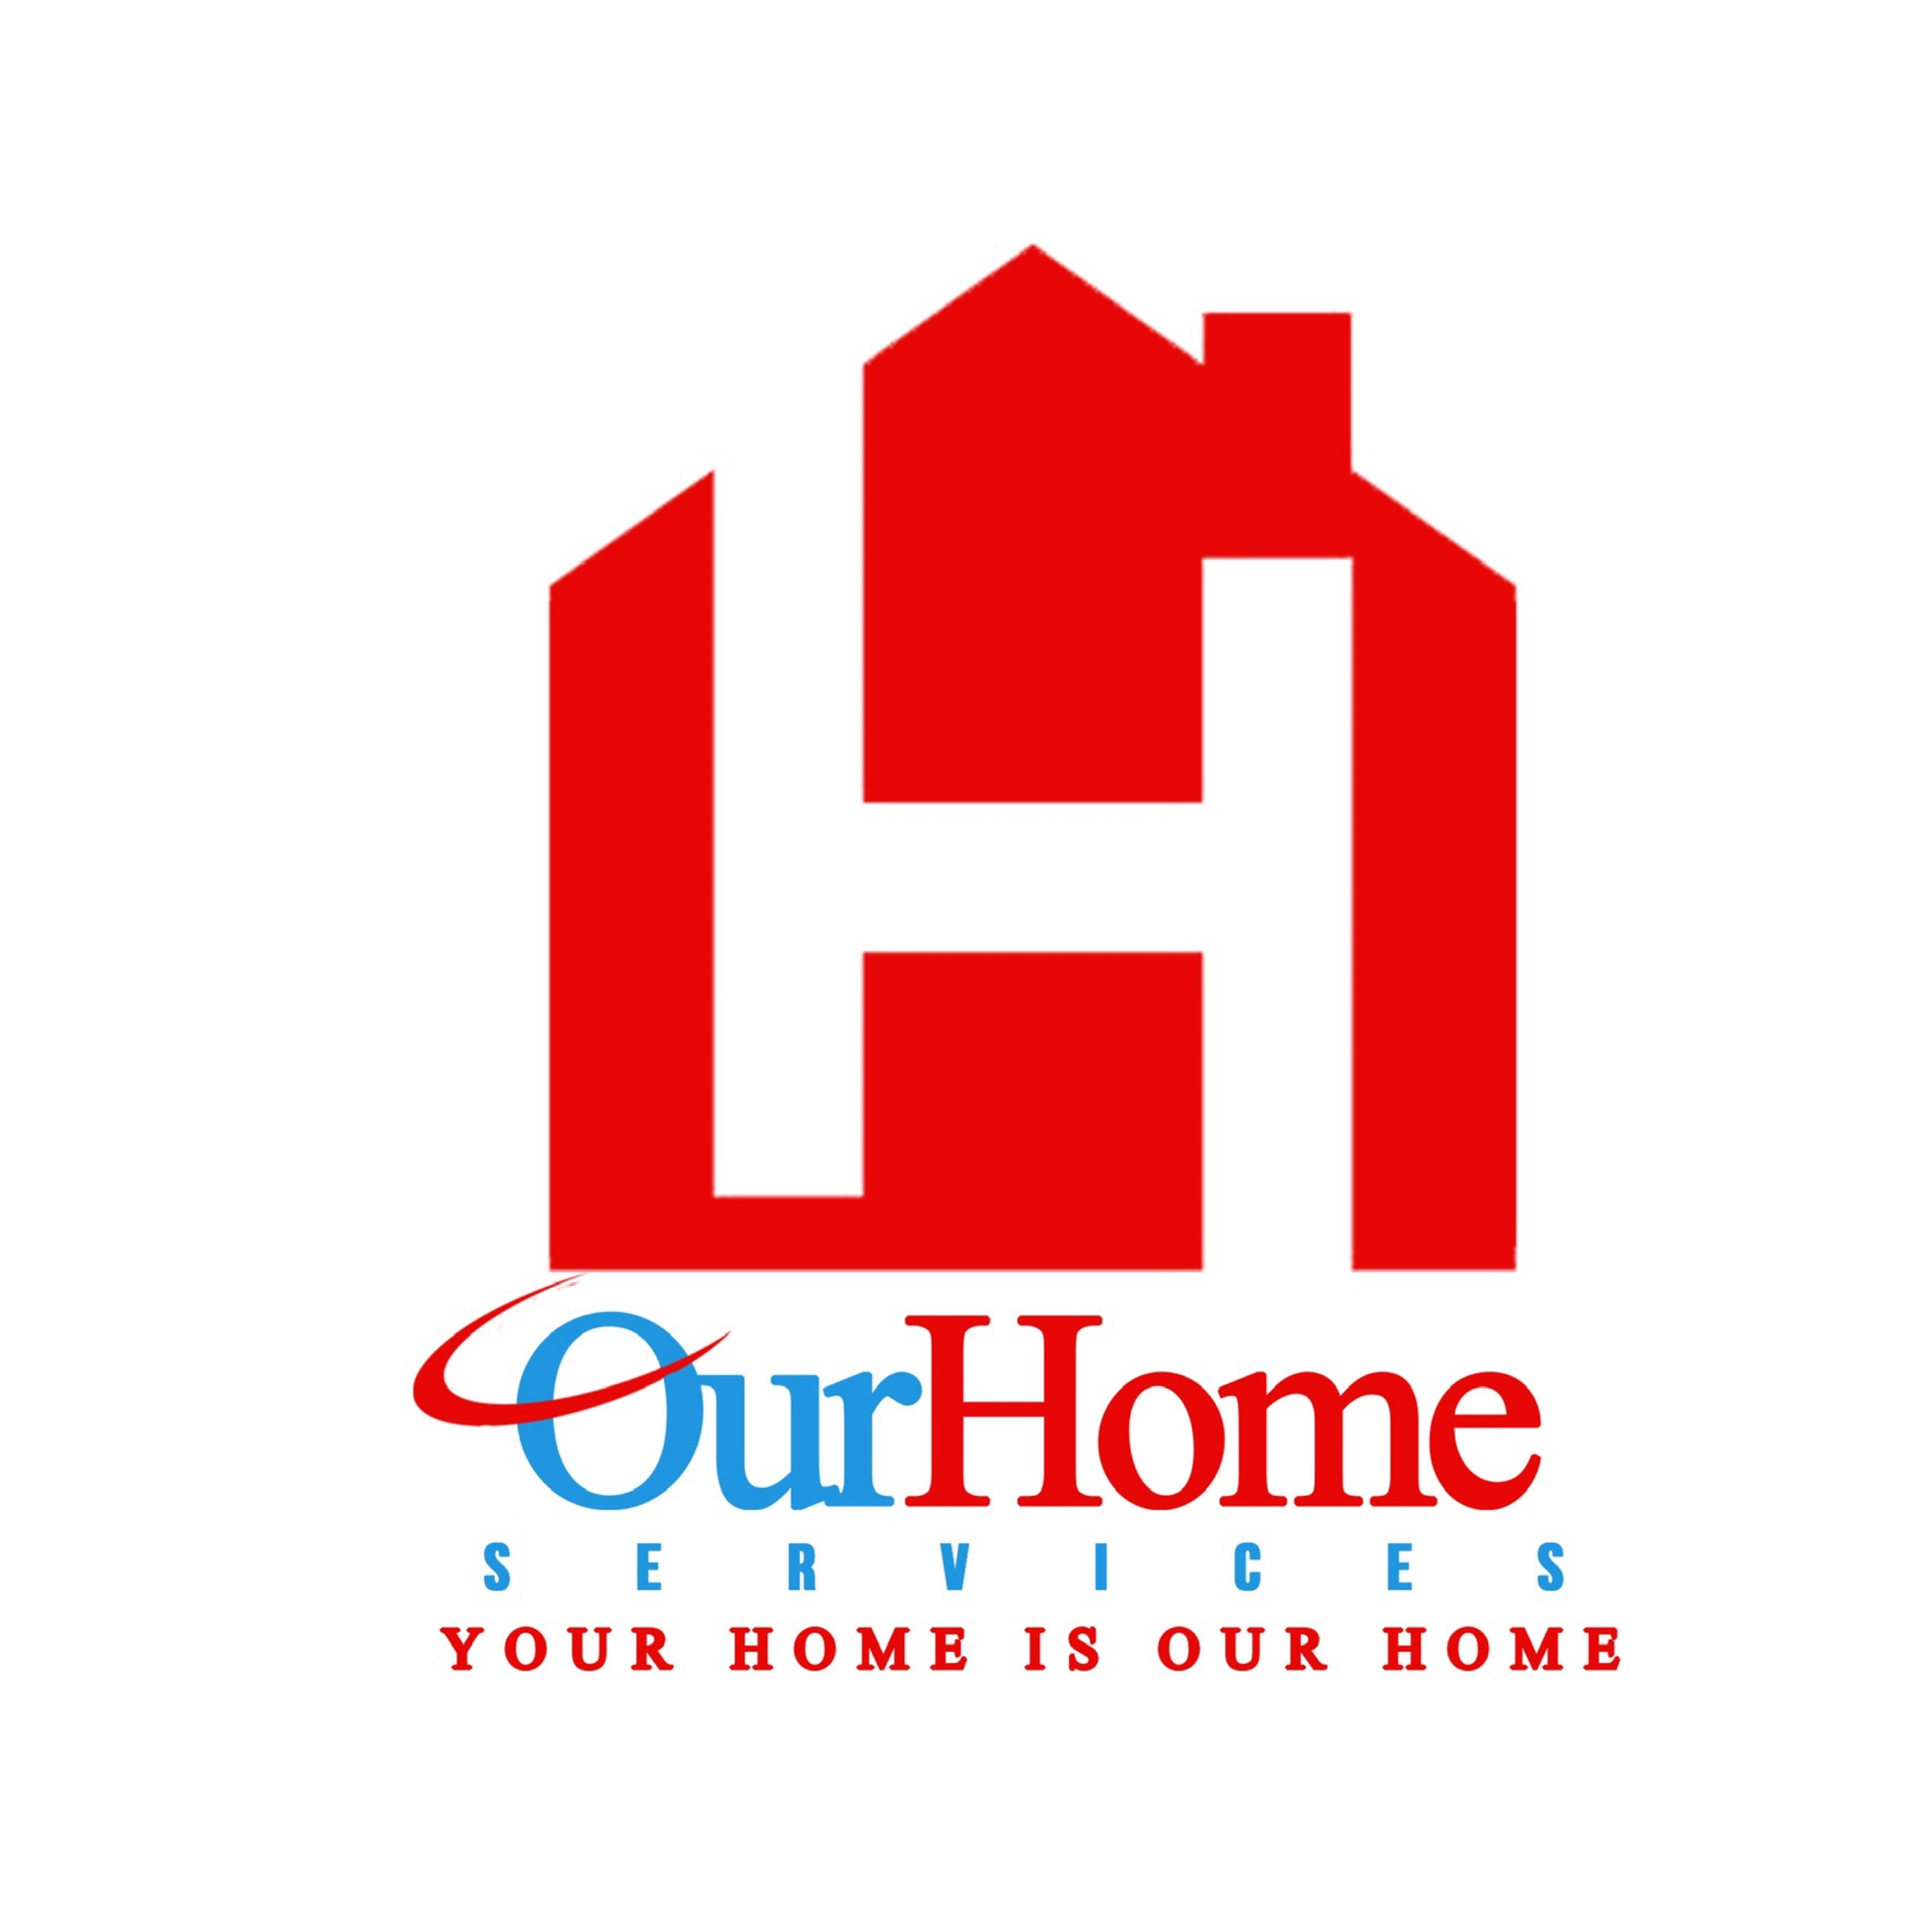 Our Home Services, Inc. Logo